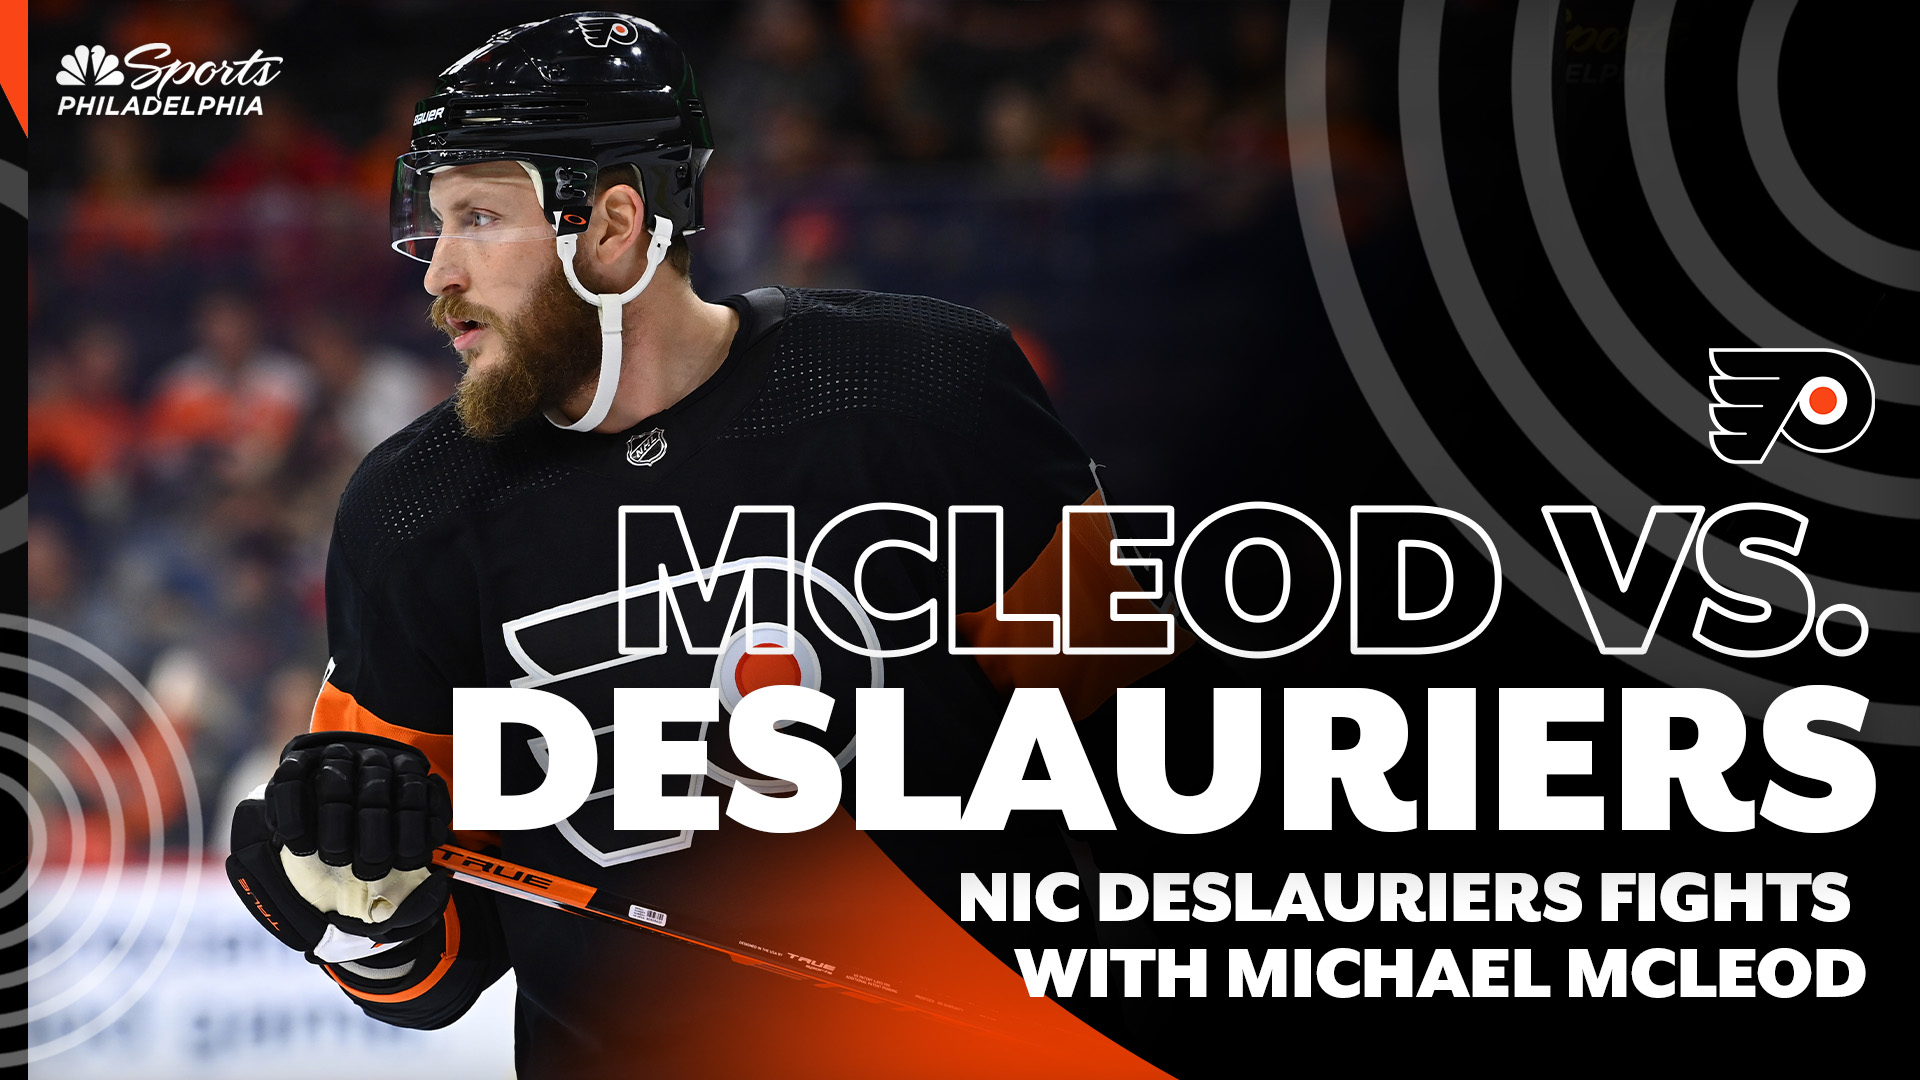 NJ Devils' Michael McLeod ready to make impact in NHL